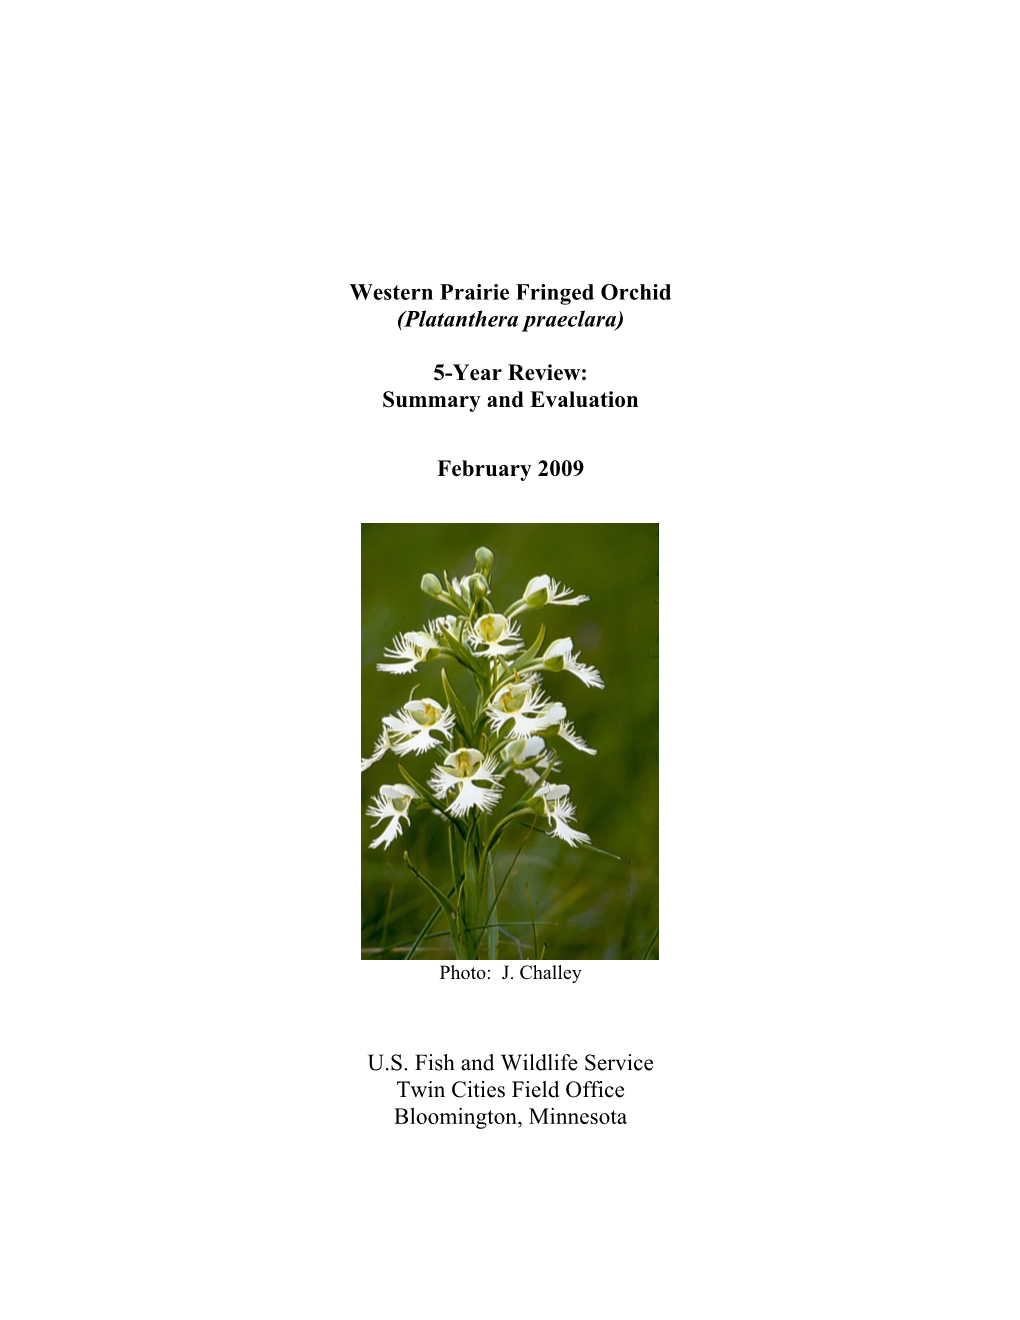 Western Prairie Fringed Orchid (Platanthera Praeclara)